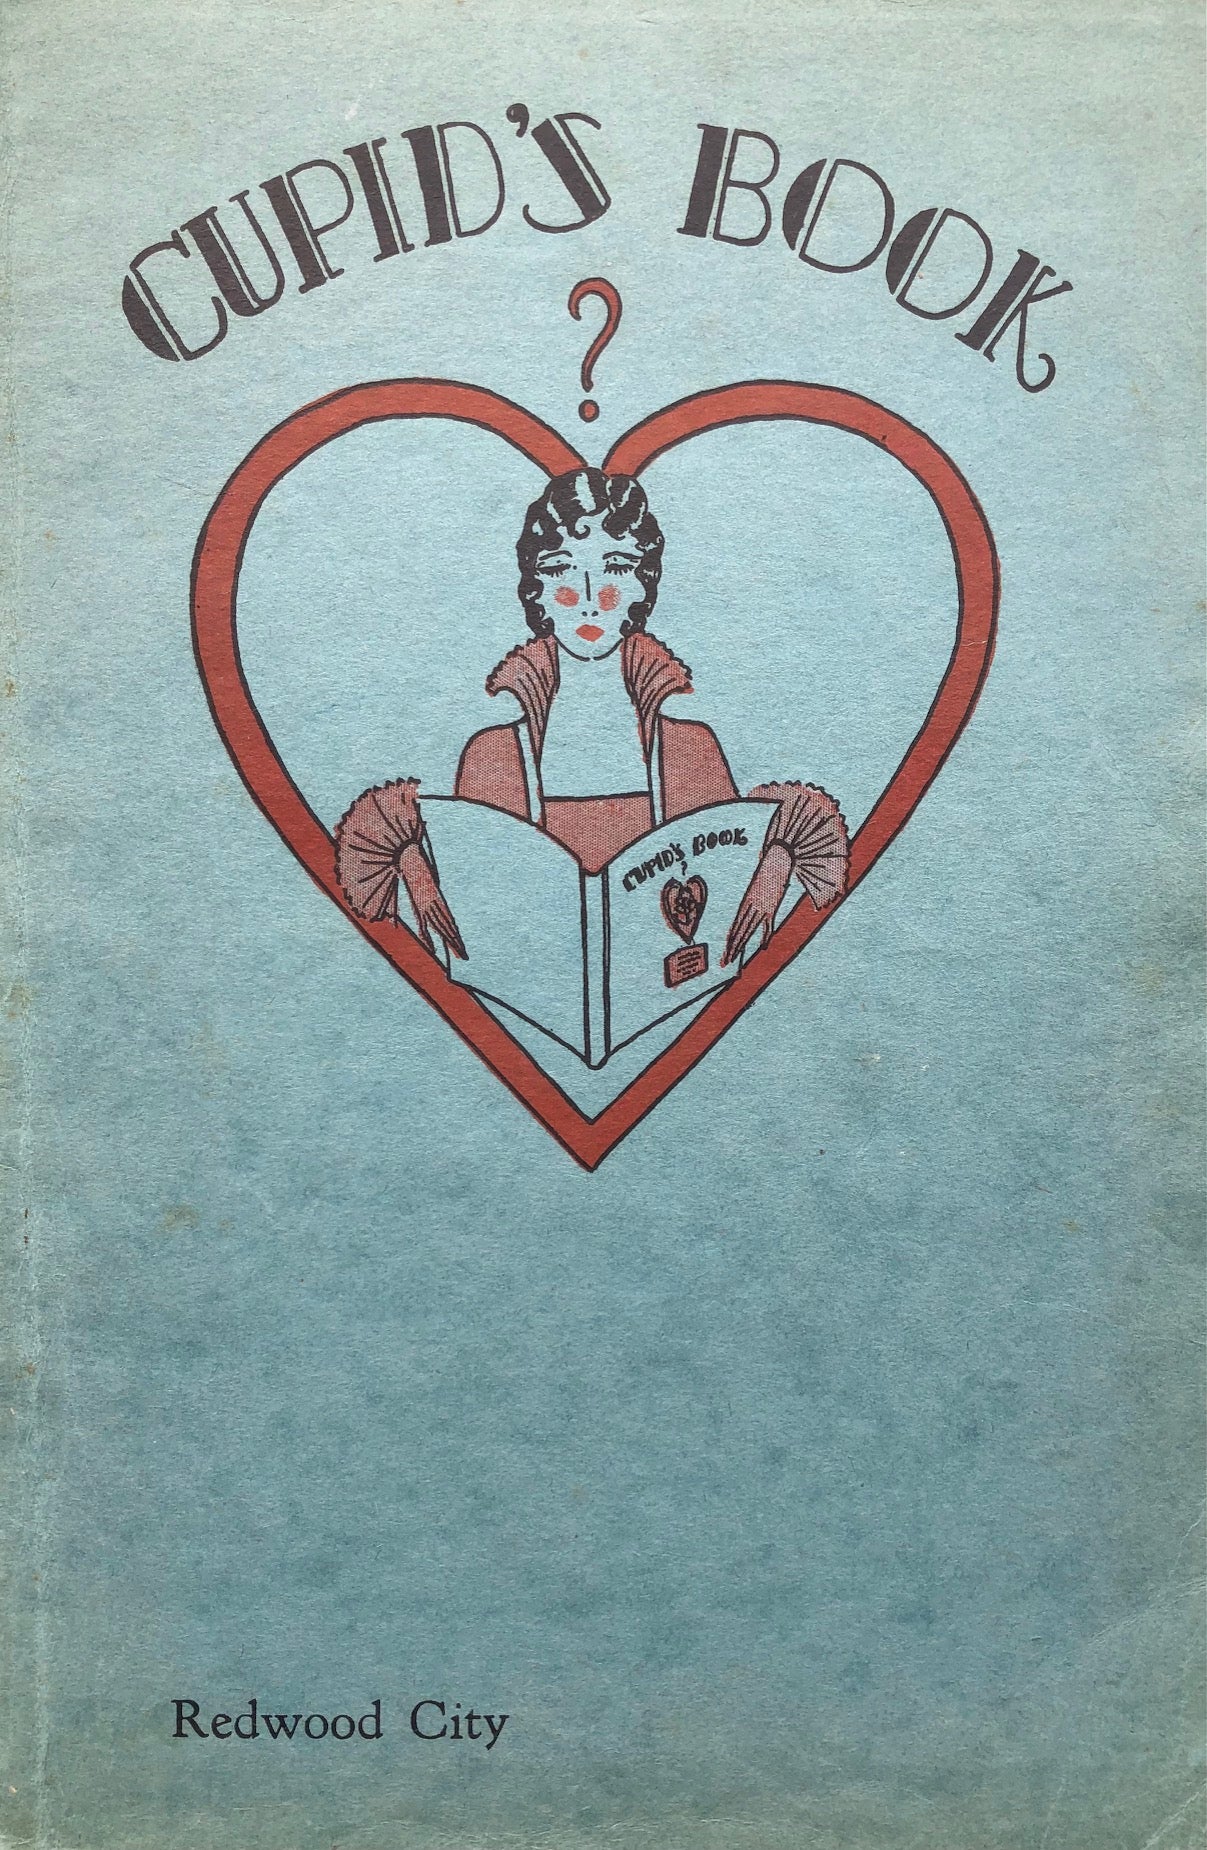 (California - Redwood City) Cupid's Book.